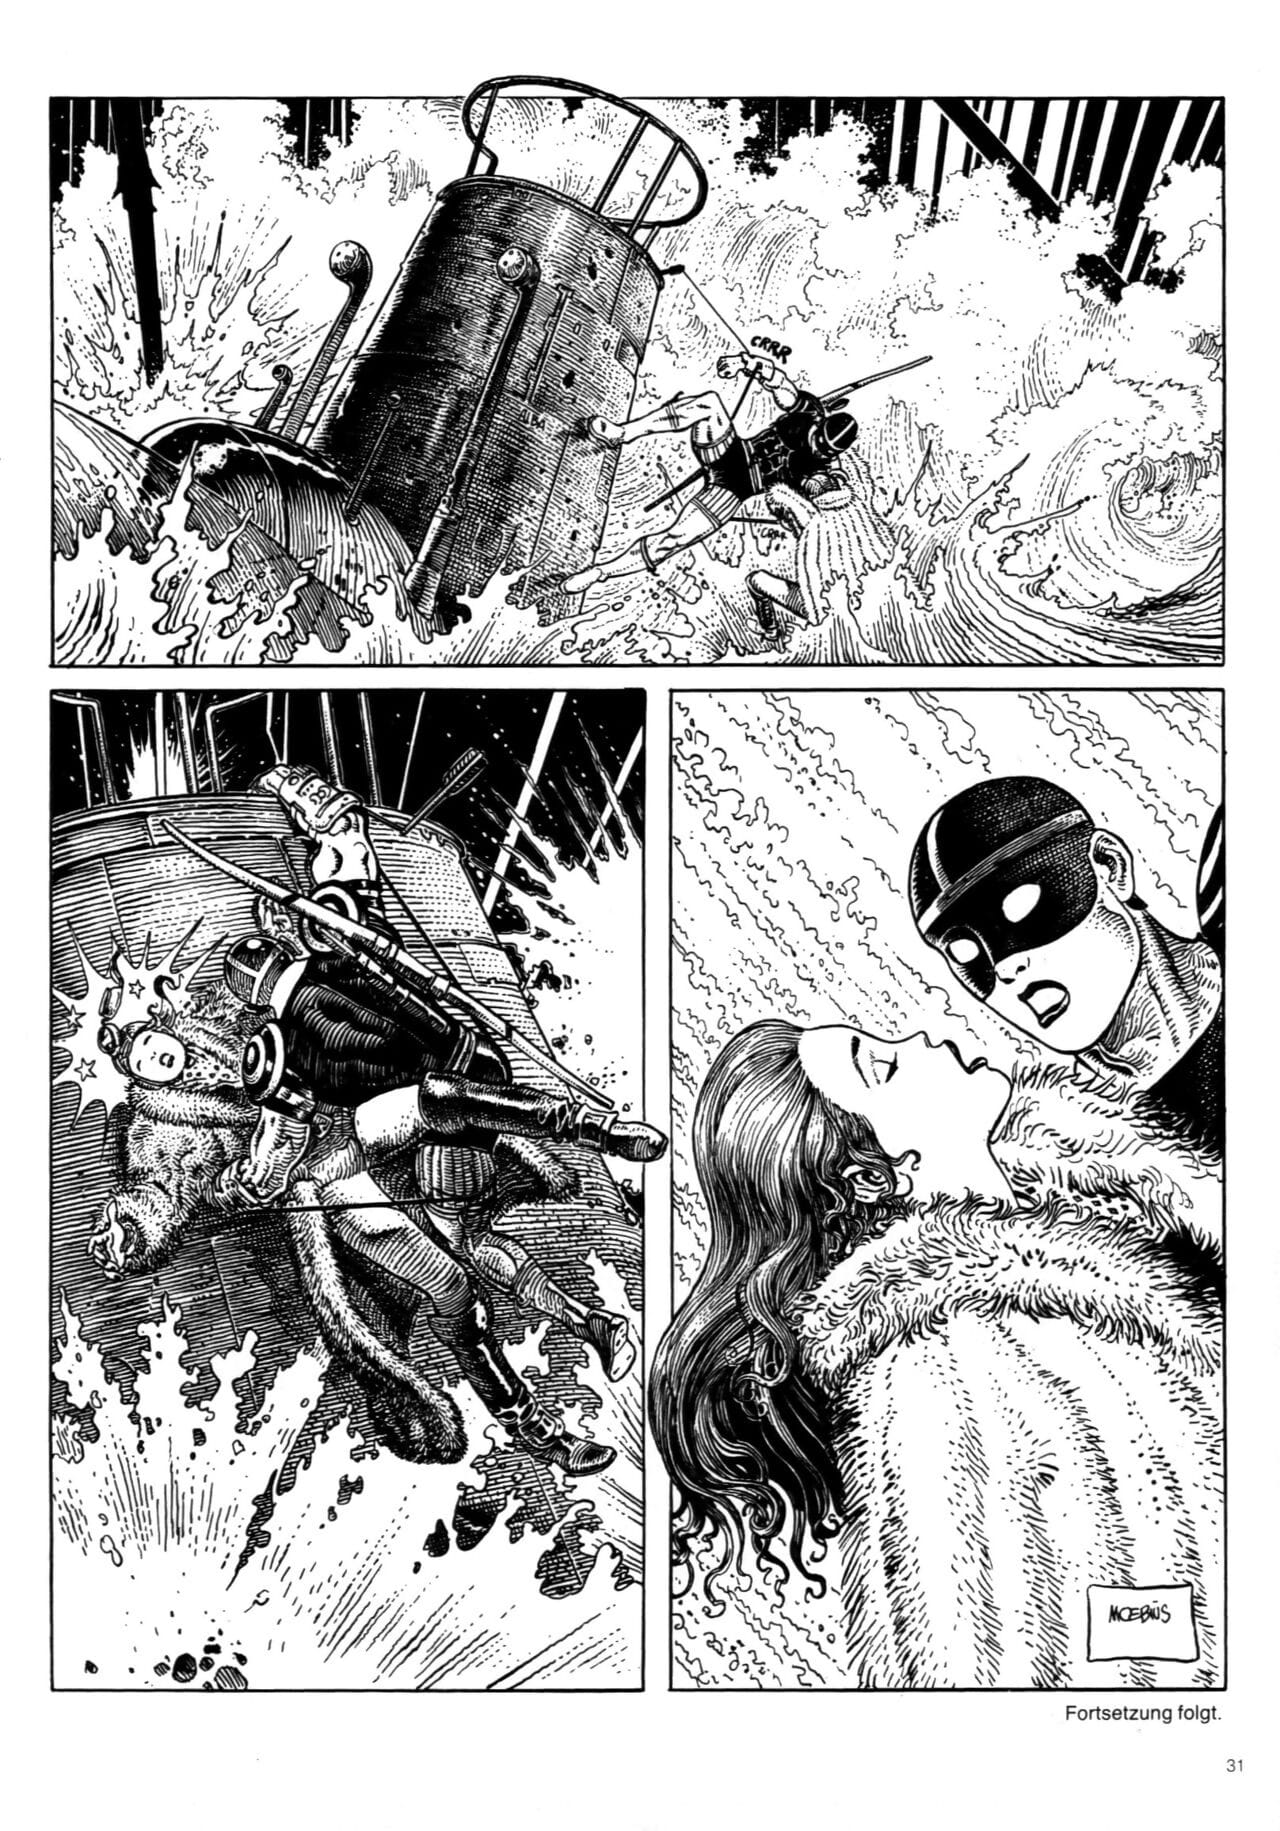 Schwermetall #030 Parte 2 page 1